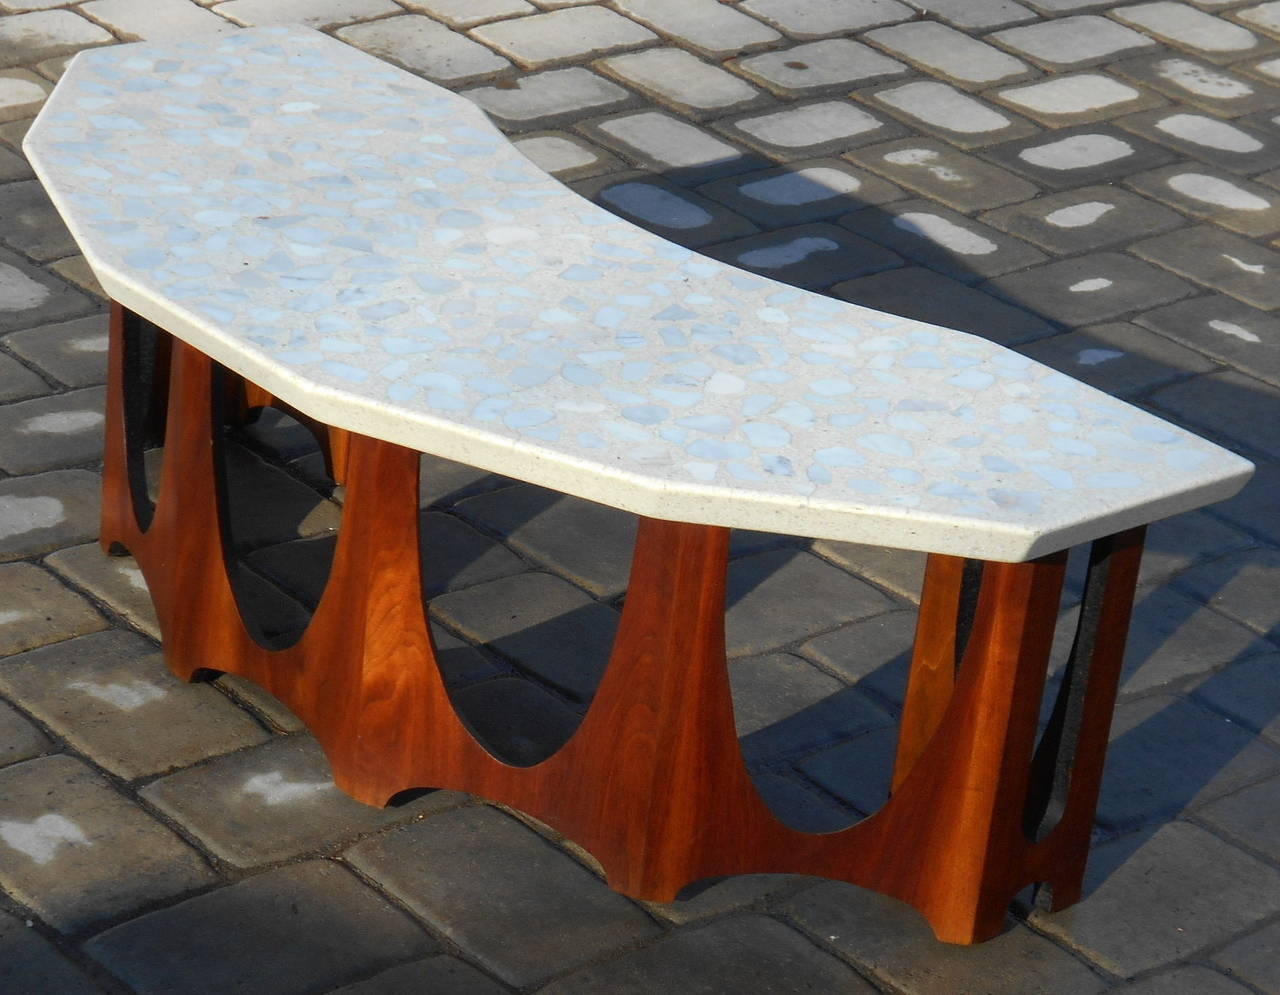 Nice Harvey Probber demi lune coffee table with a terrazzo top. Nice walnut base.